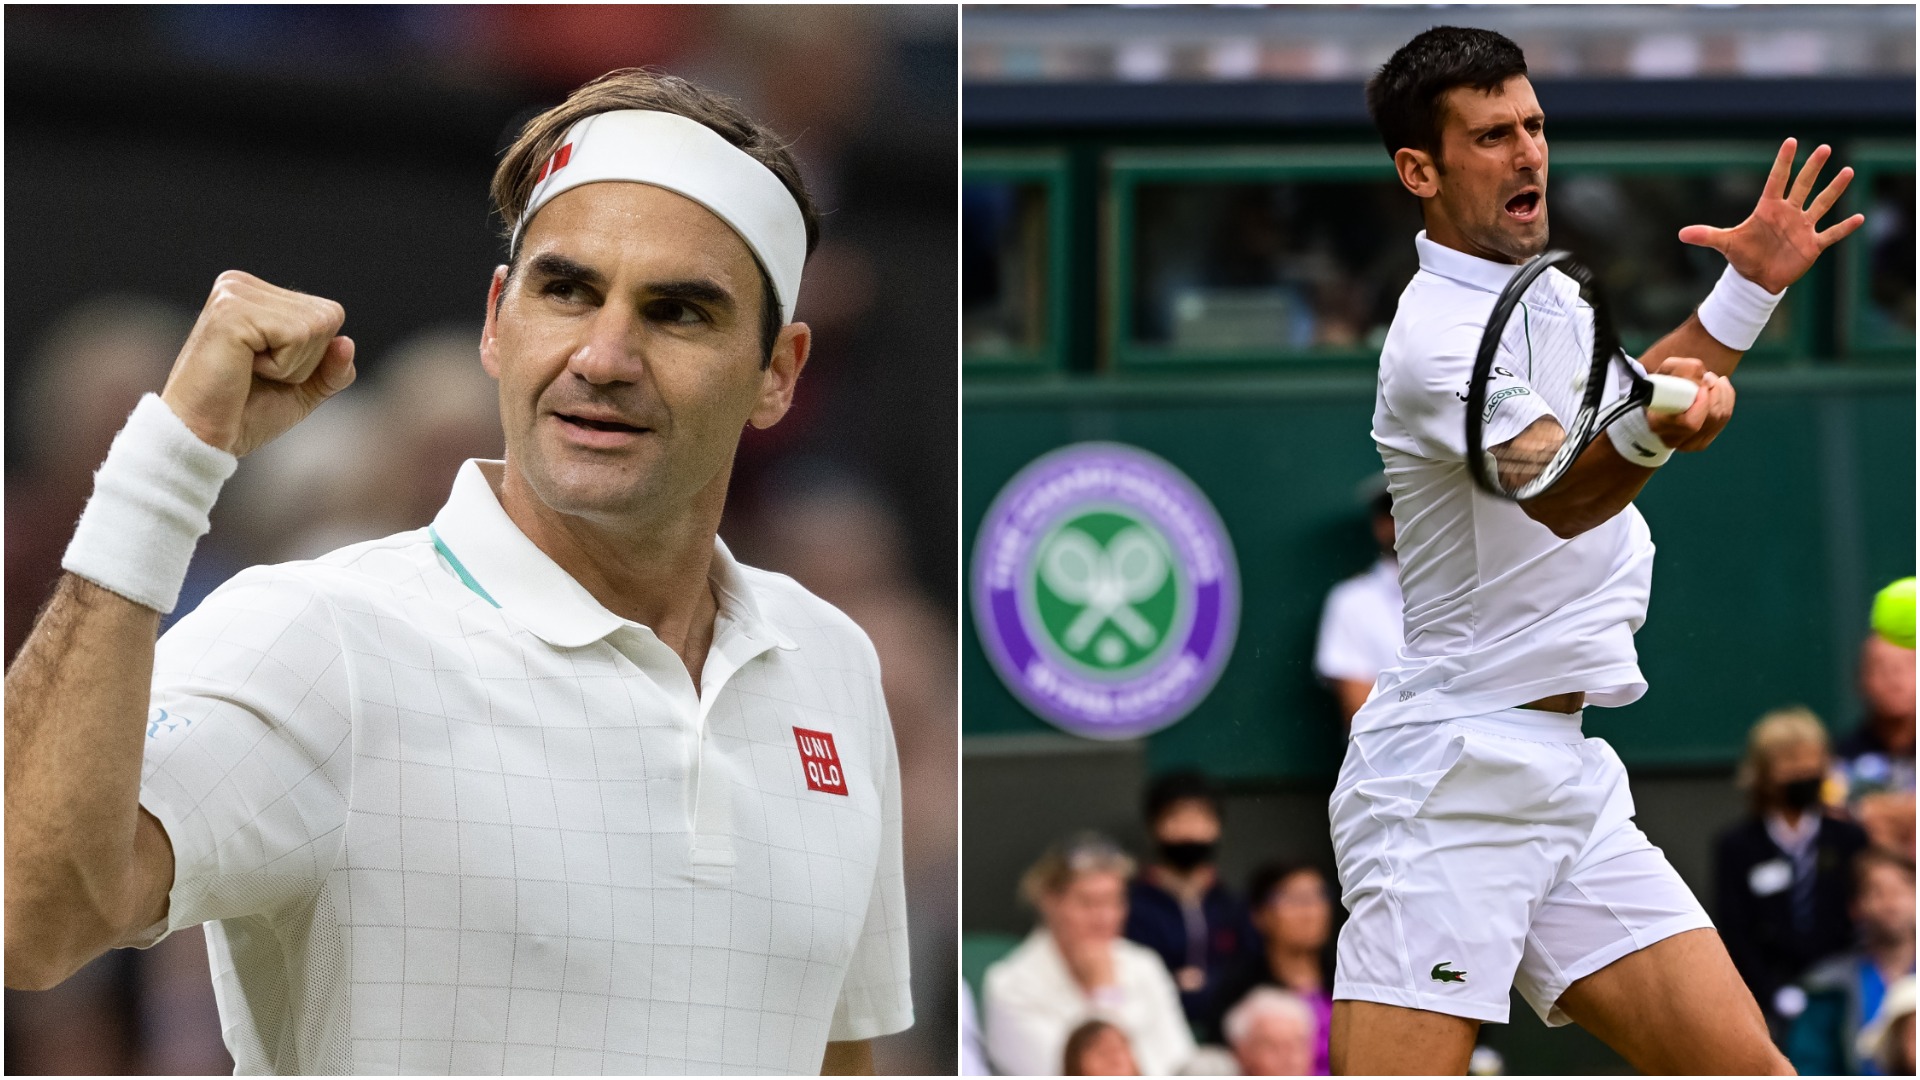 Wimbledon 2021 TV Schedule How to Watch Roger Federer, Novak Djokovic Live